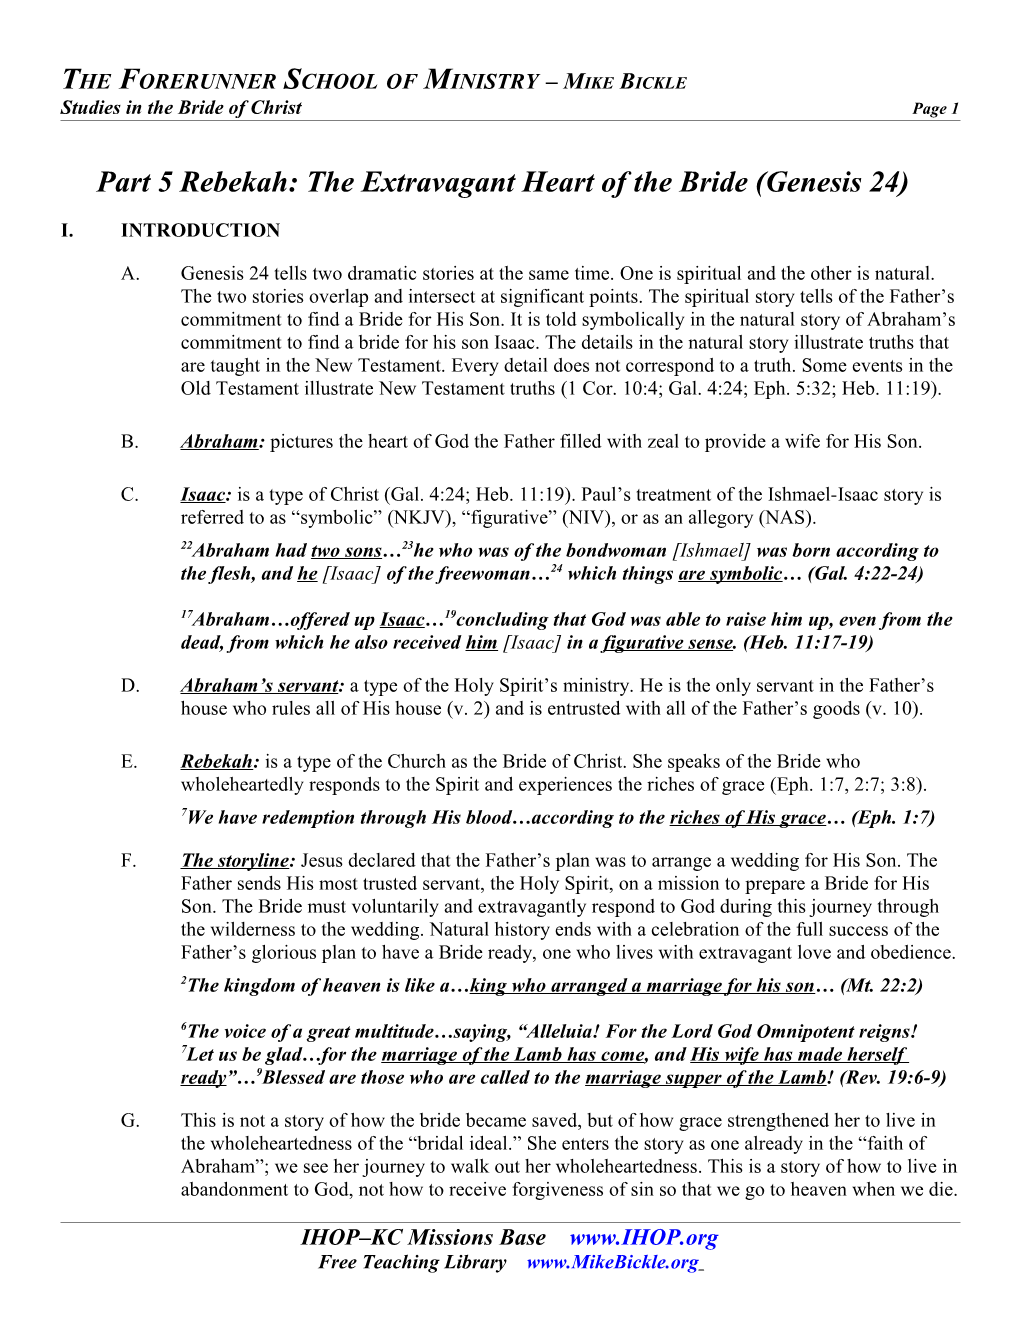 Part 5 Rebekah: the Extravagant Heart of the Bride (Genesis 24)